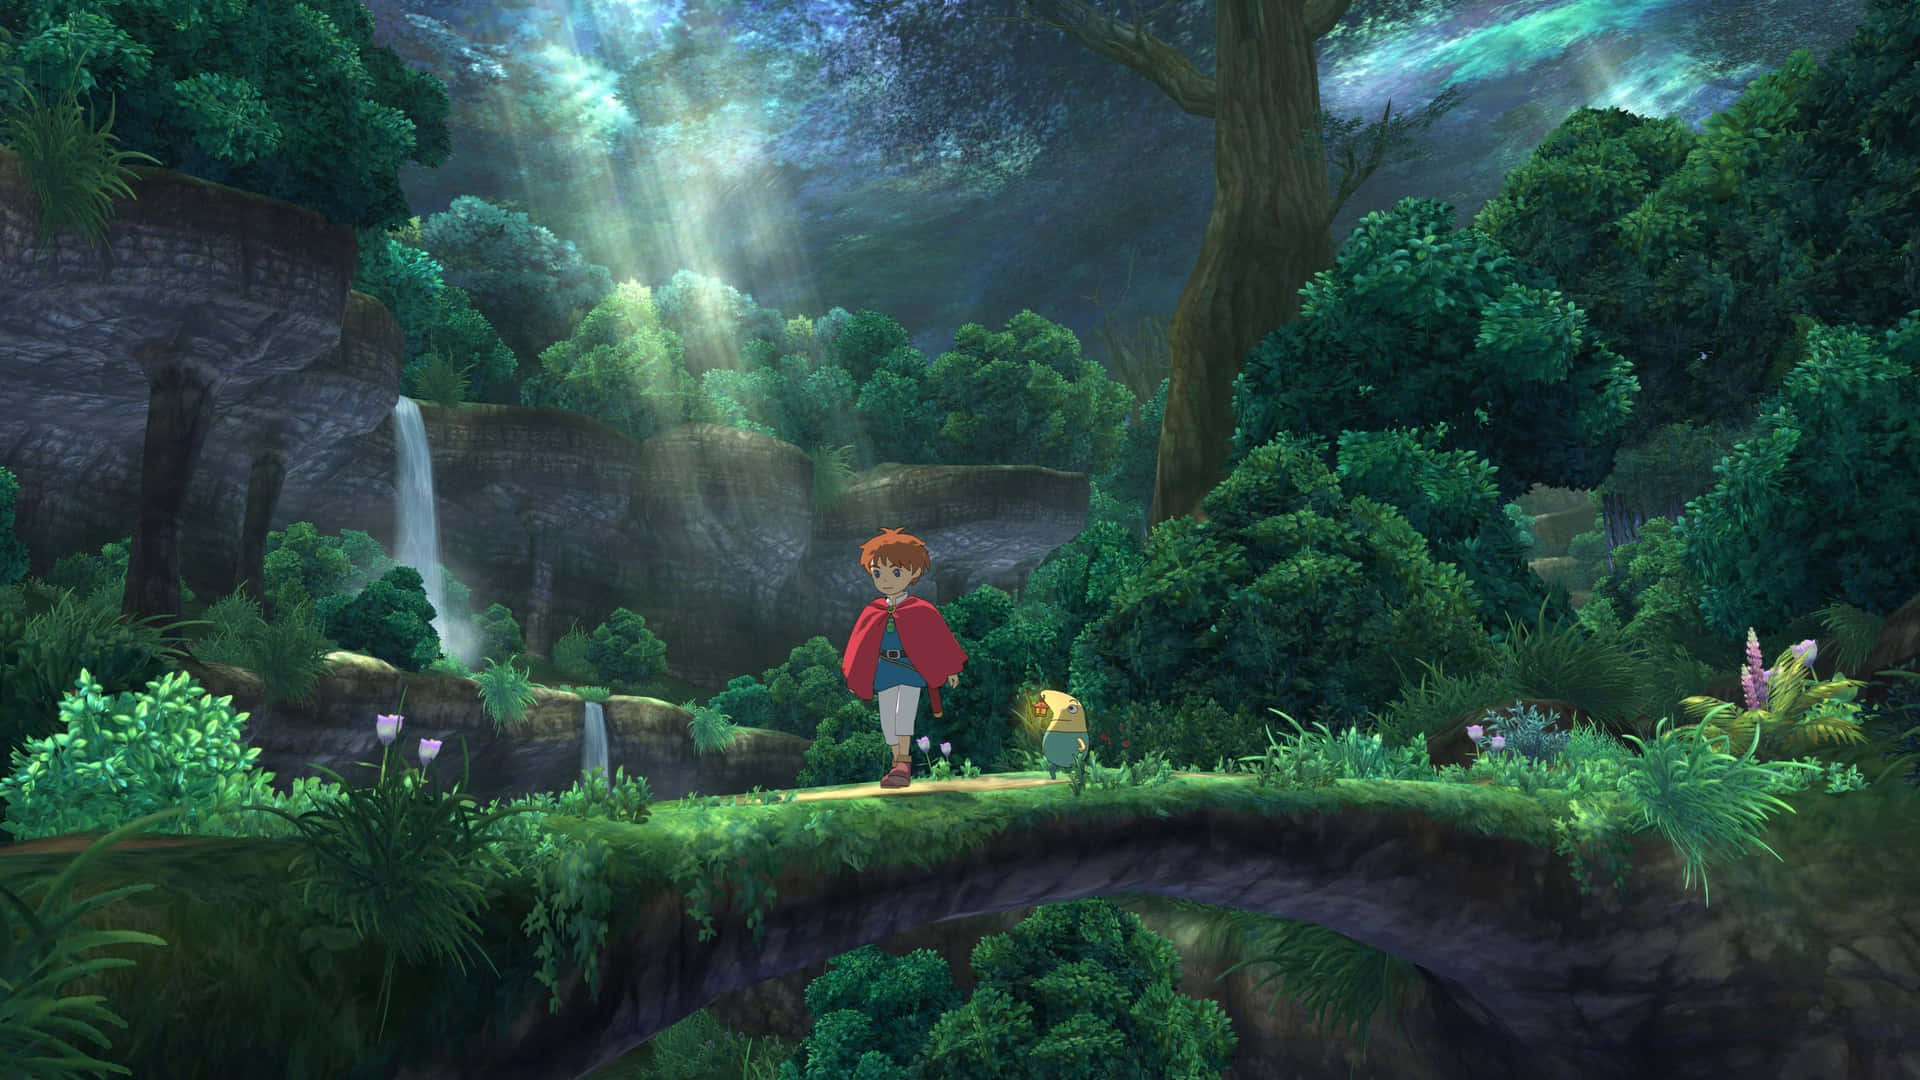 Caption: Majestic Studio Ghibli-Inspired Fantasy Landscape